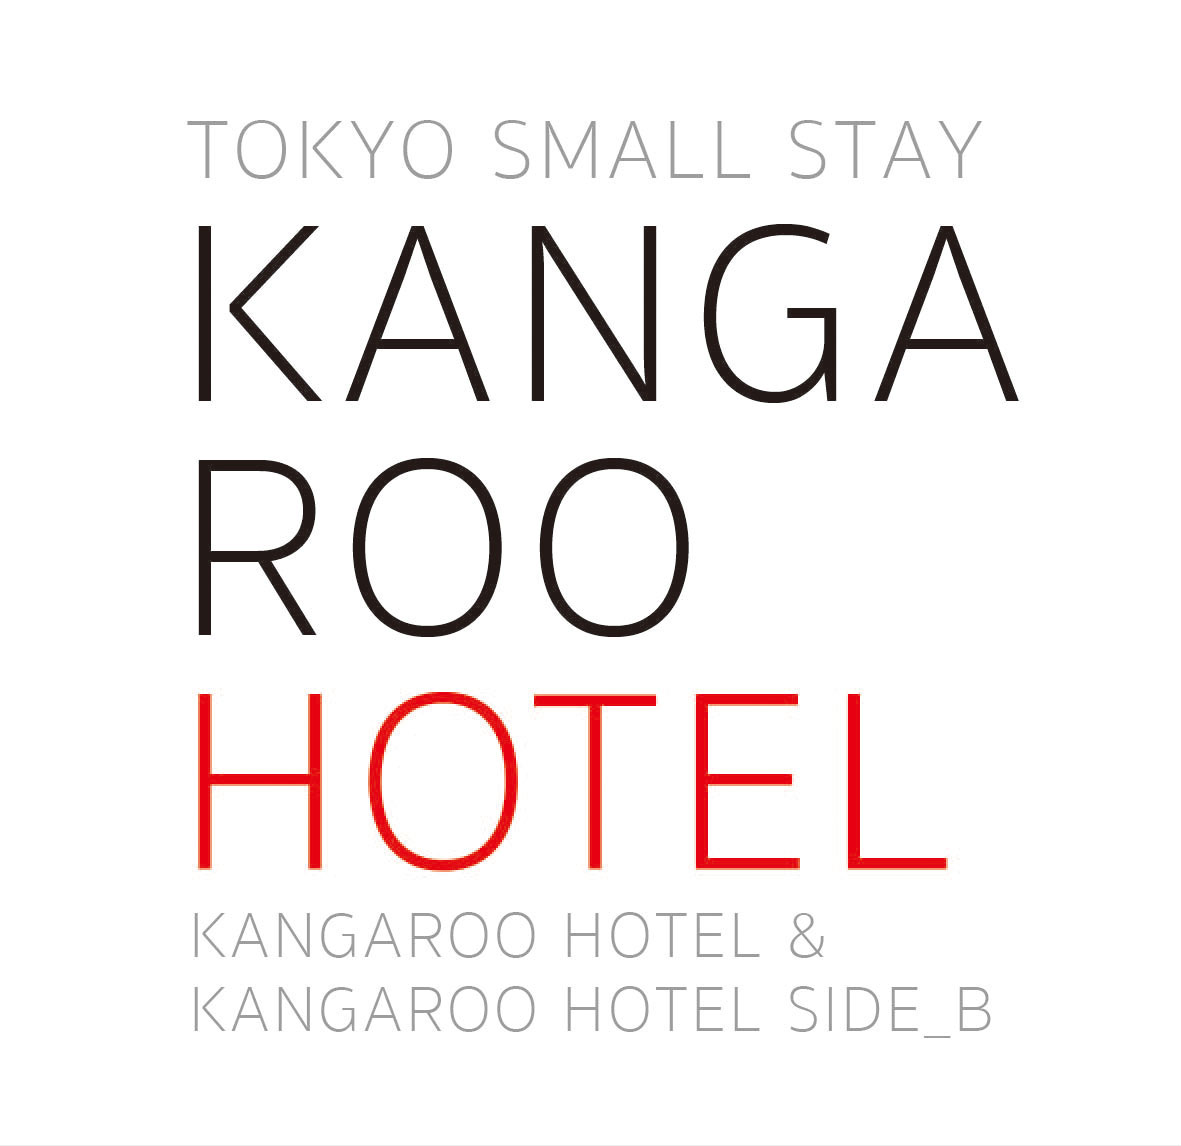 TOKYO SMALL STAY KANGAROO HOTEL & KANGAROO HOTEL SIDE_B